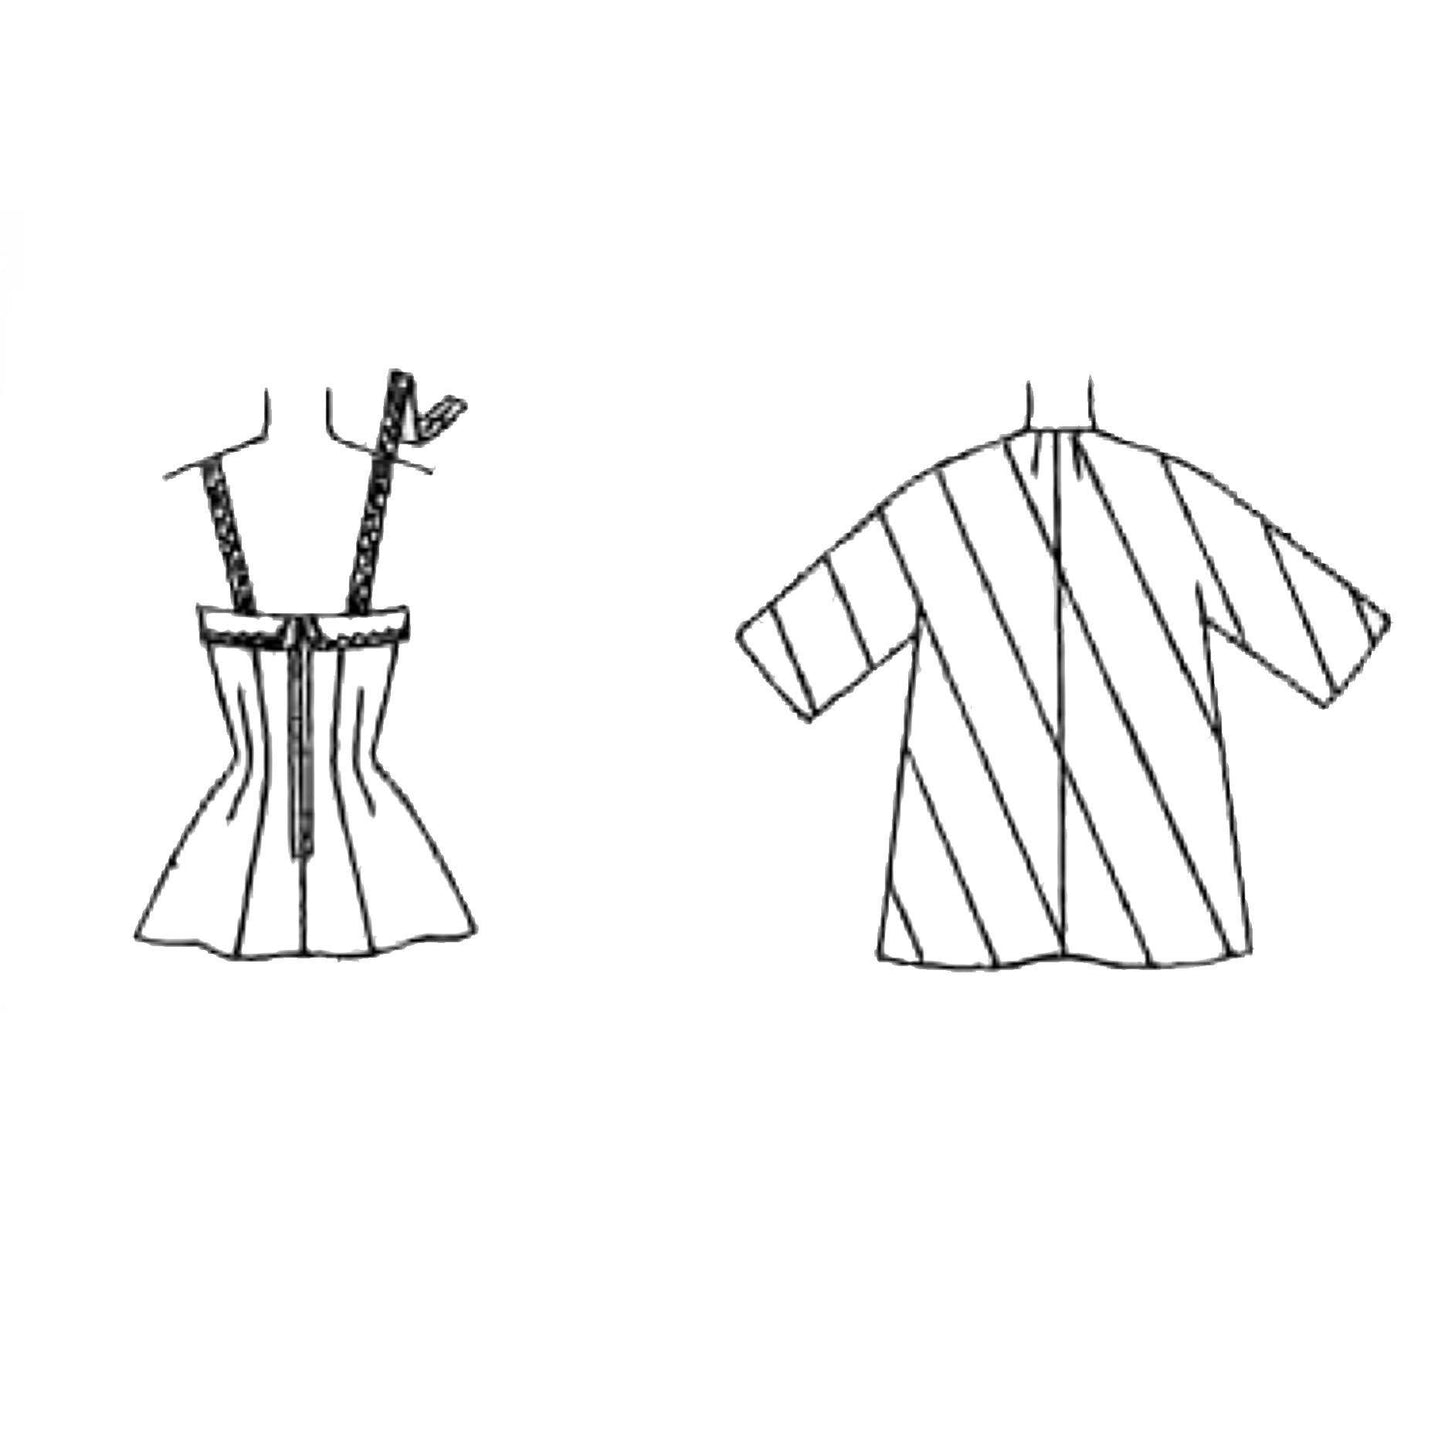 back view of a beachwear pattern